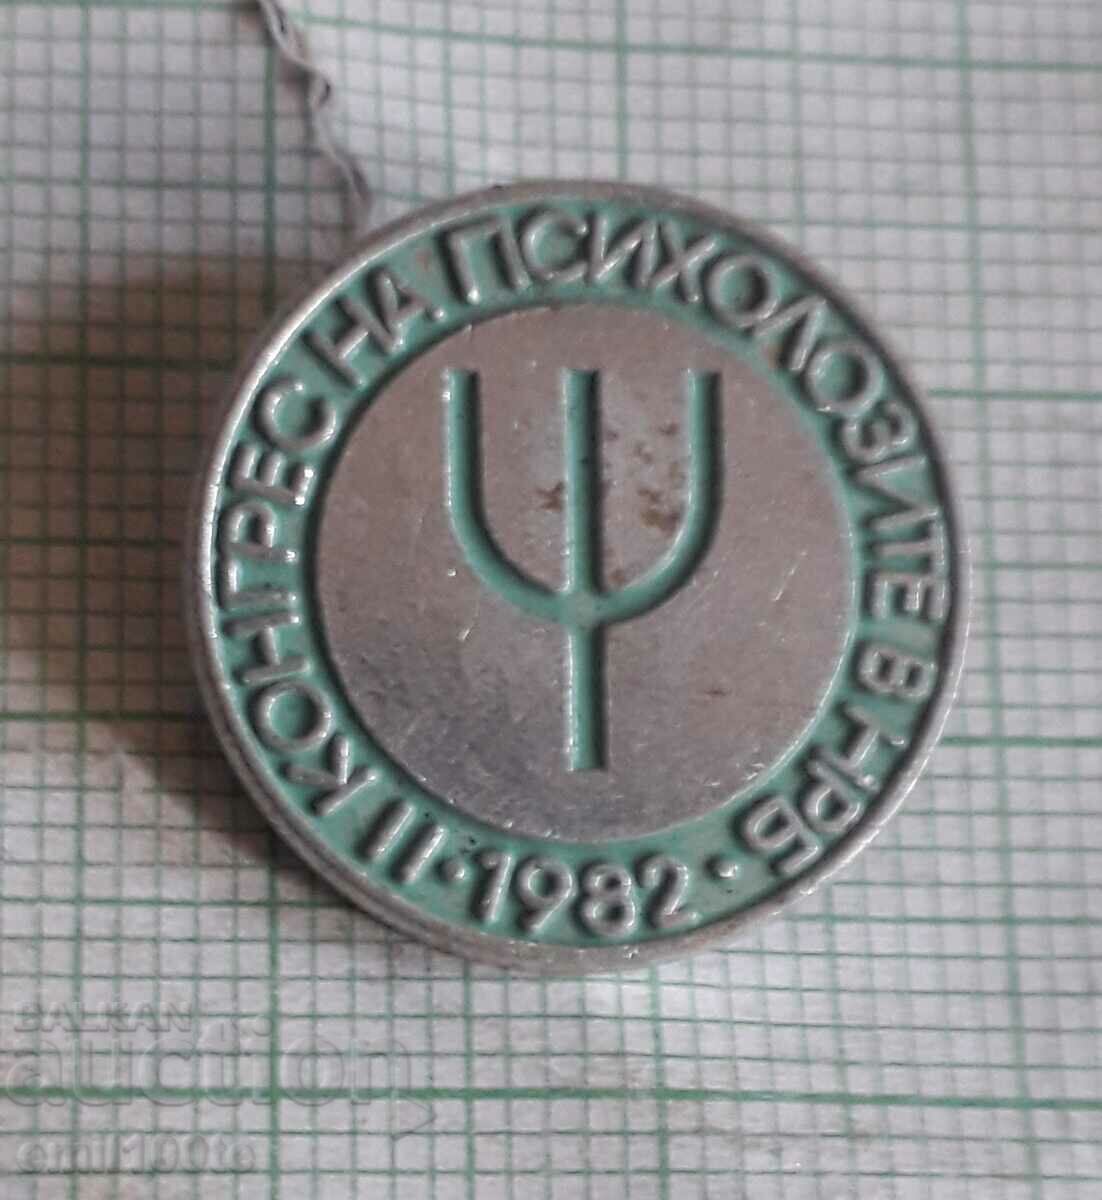 Badge - Congress of psychologists FEPSAC FEPSAC Varna 1982